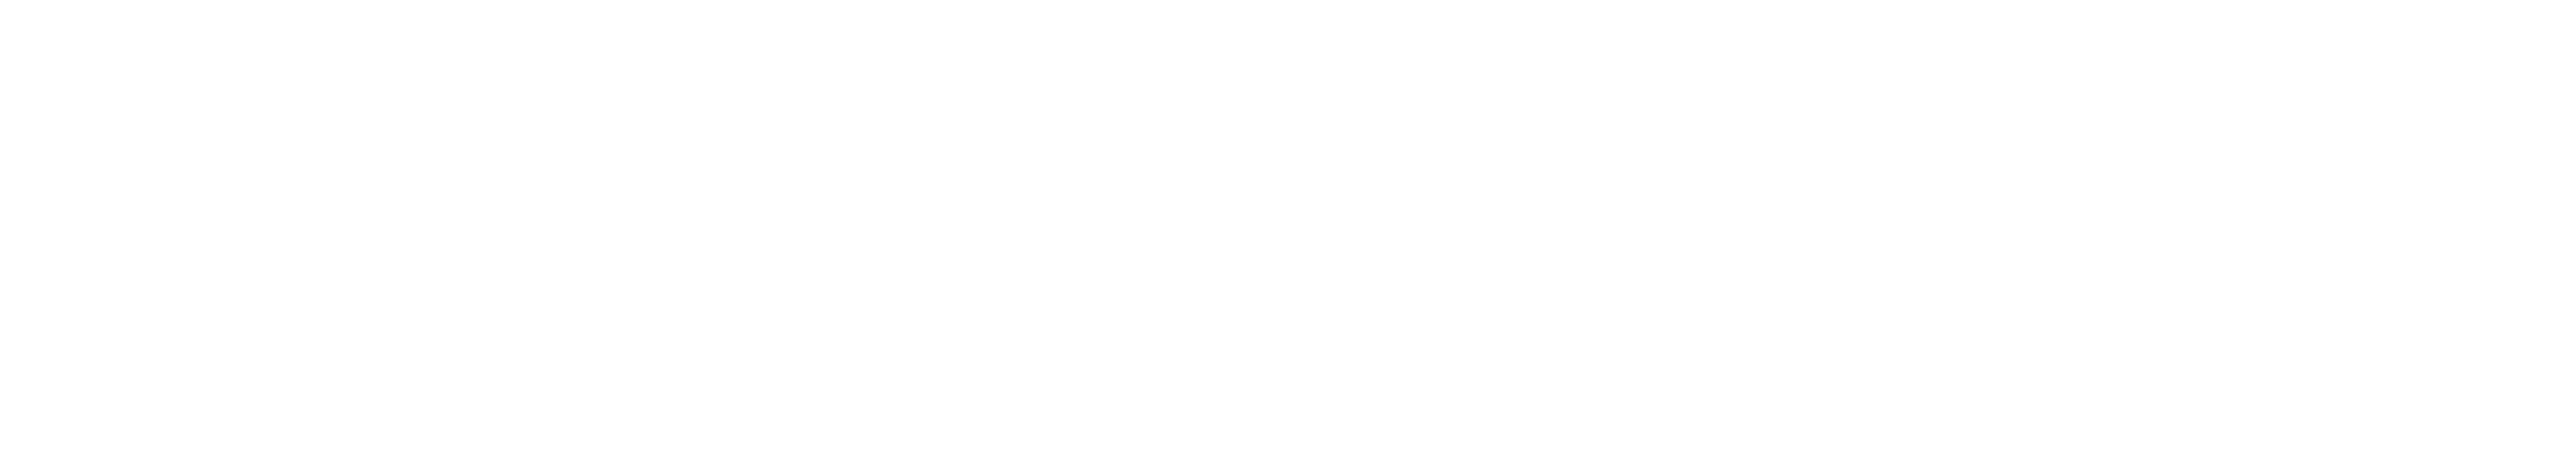 Bell denver tech center logo